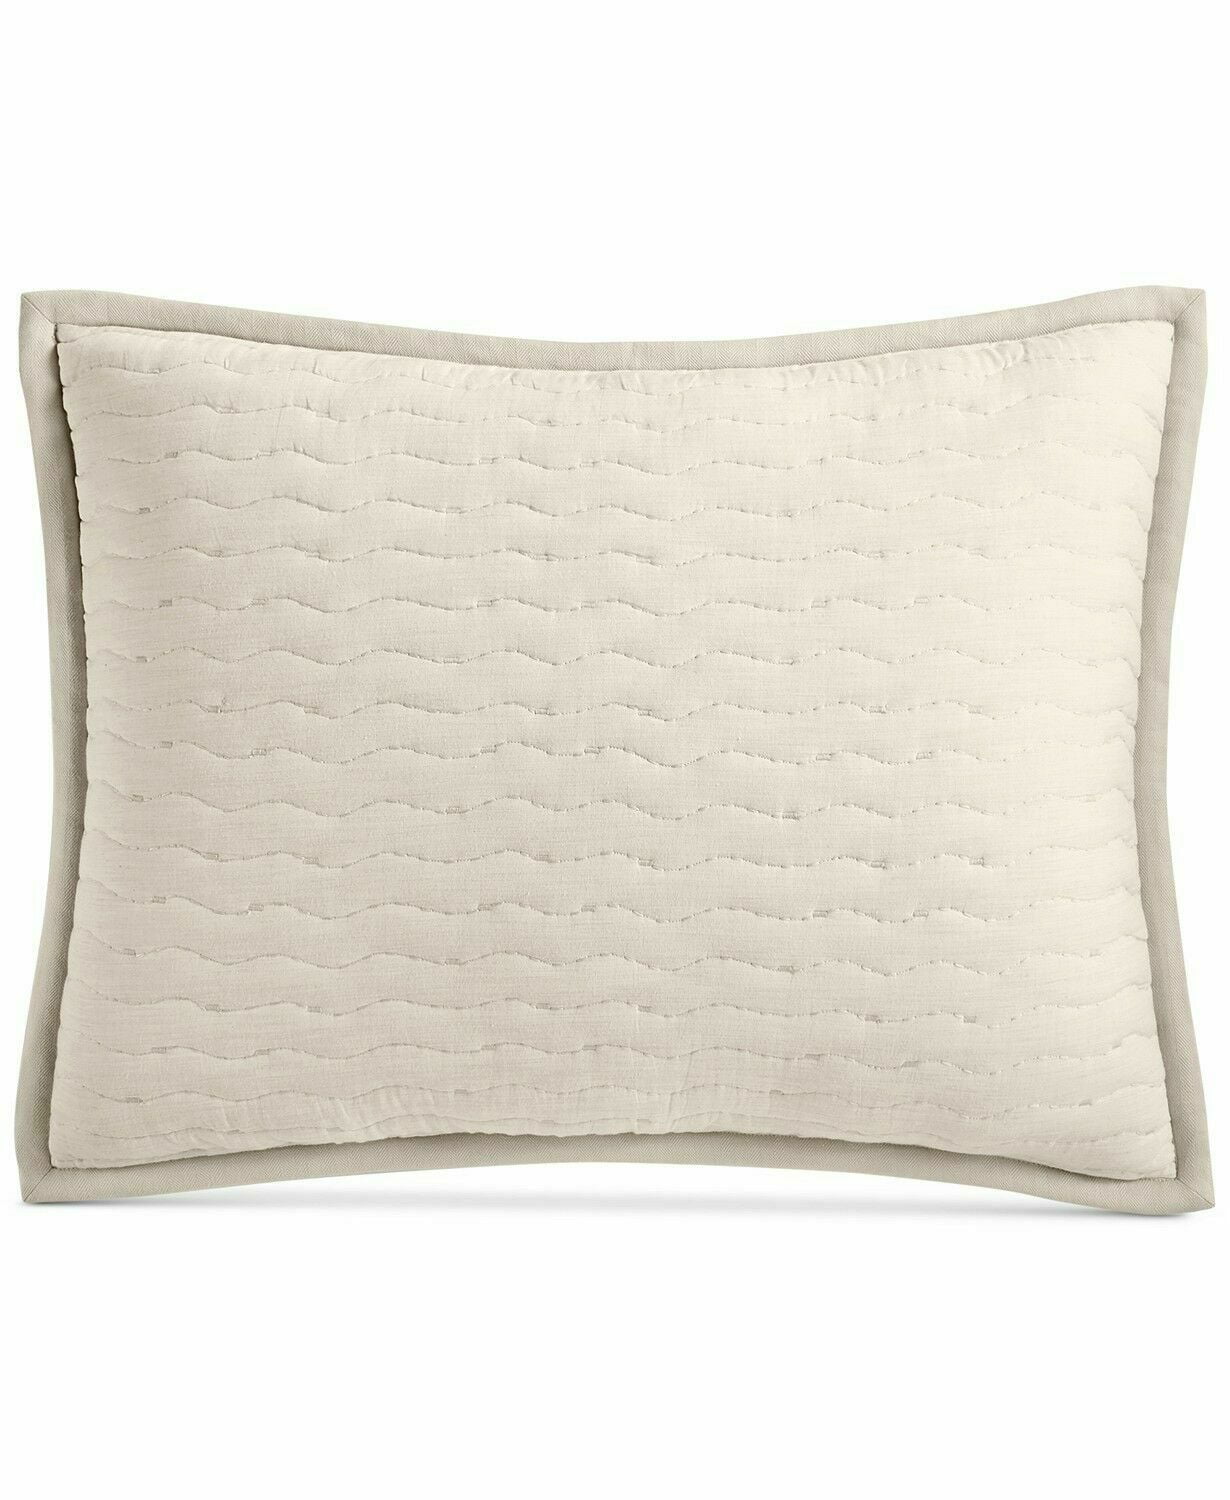 Hotel Collection Trousseau Cotton Blend EURO Pillow Sham WHITE New 